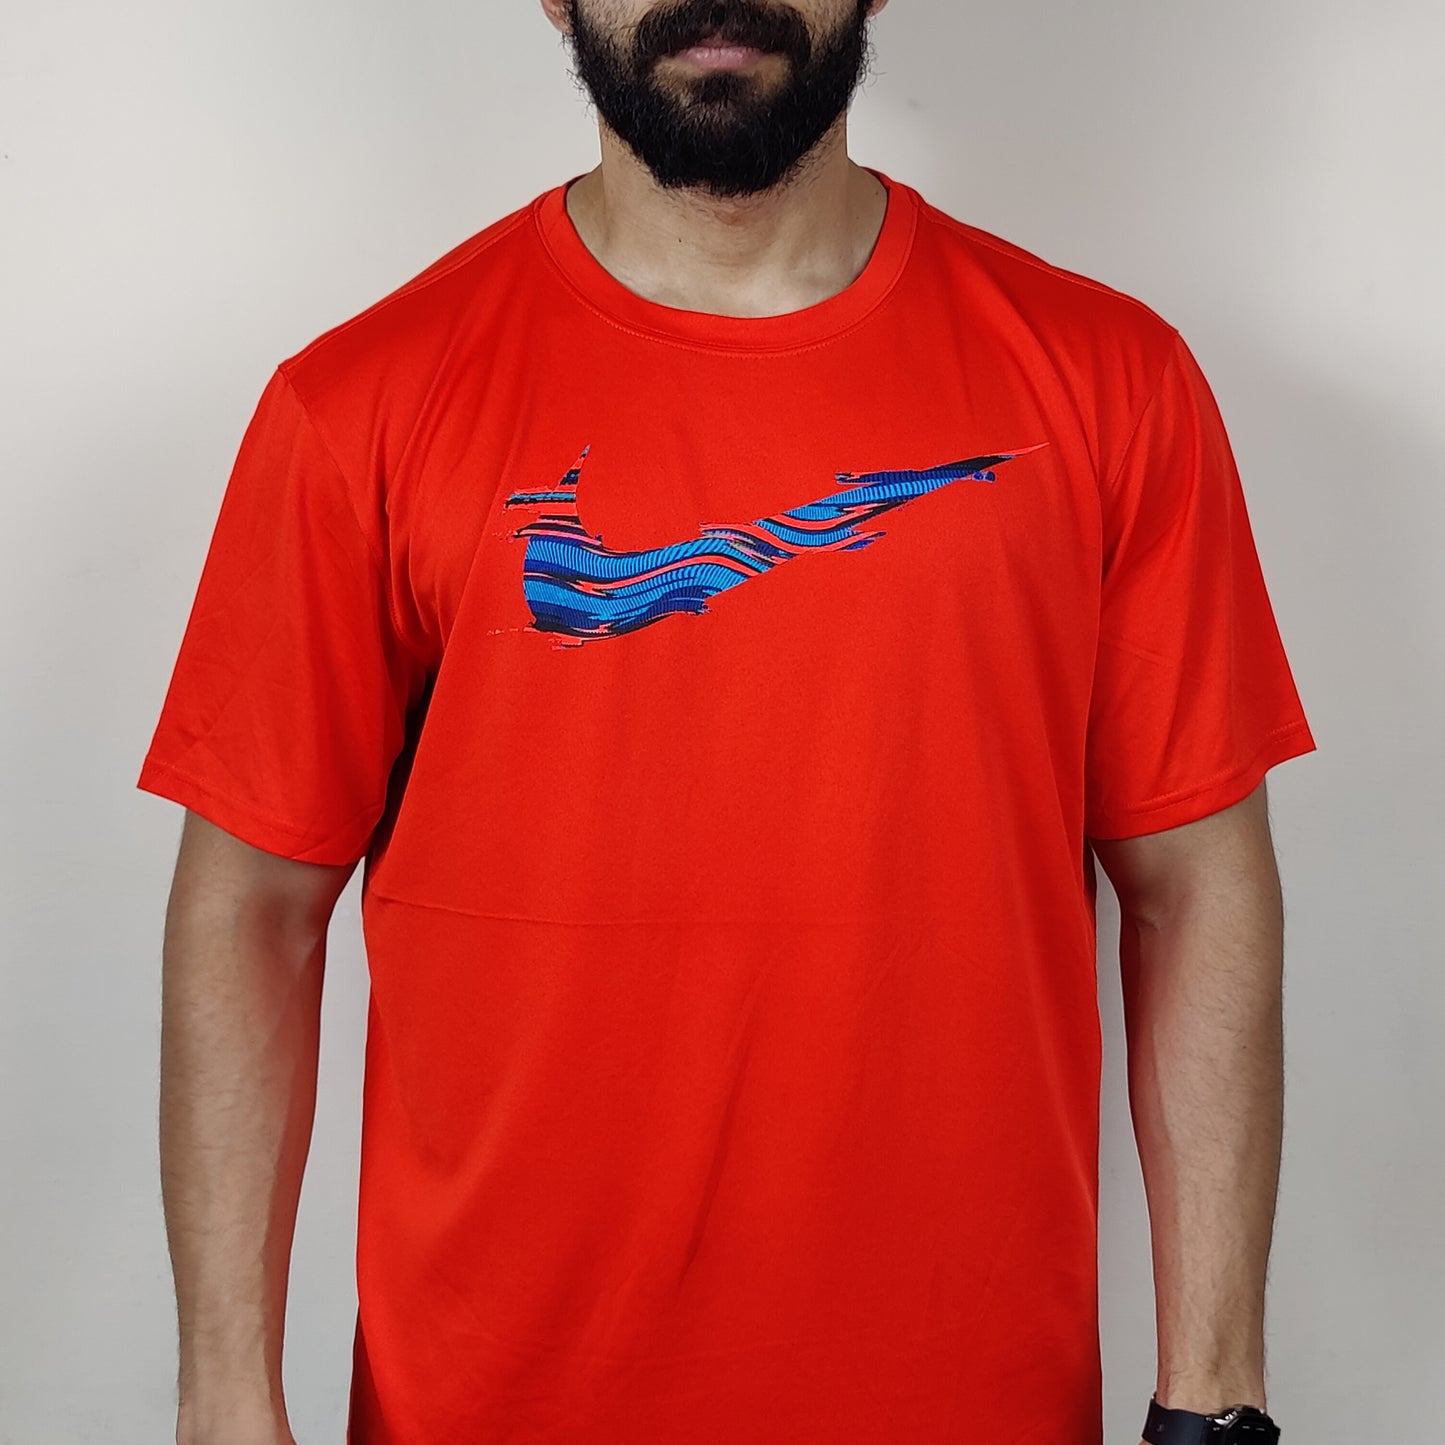 Nike DriFit - Orange